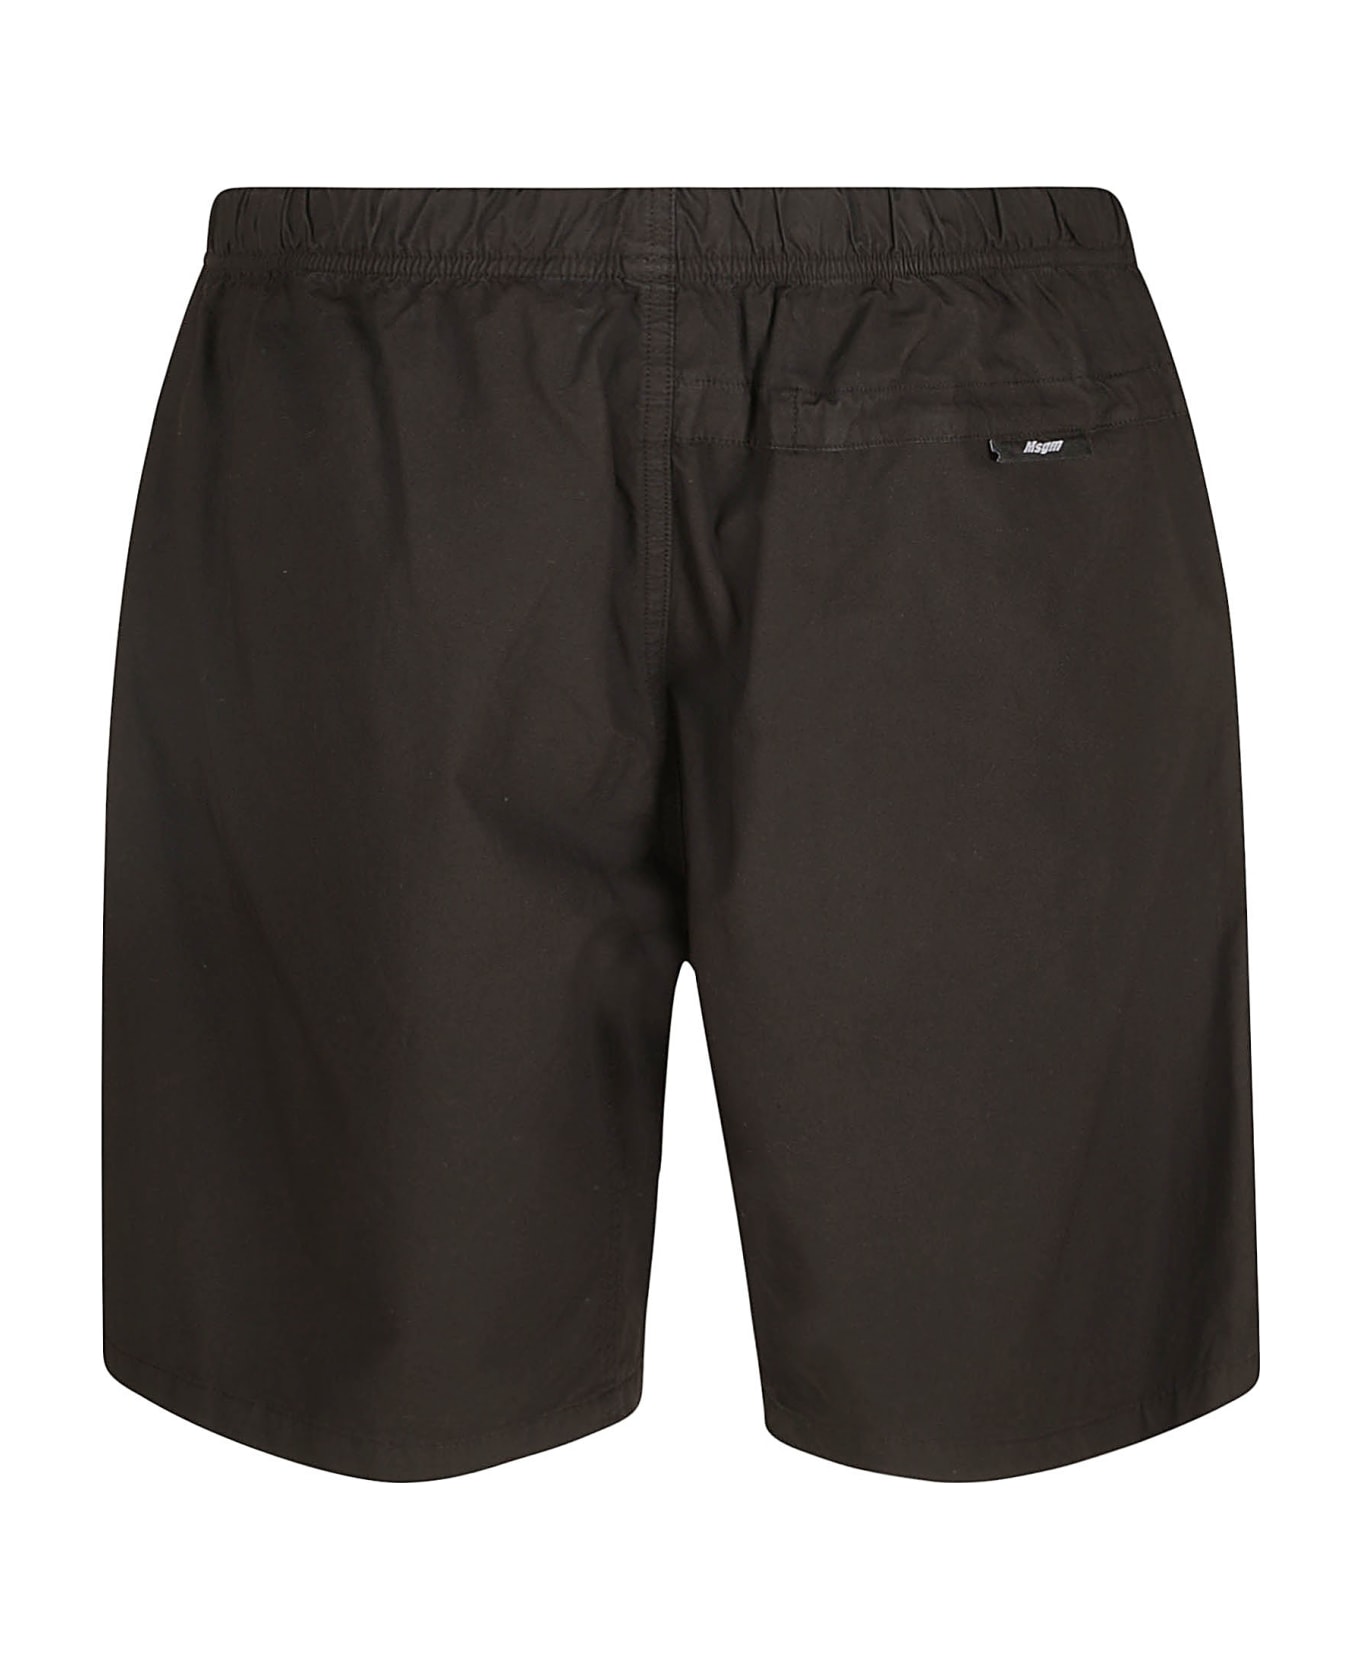 MSGM Belted Bermuda Shorts - Black